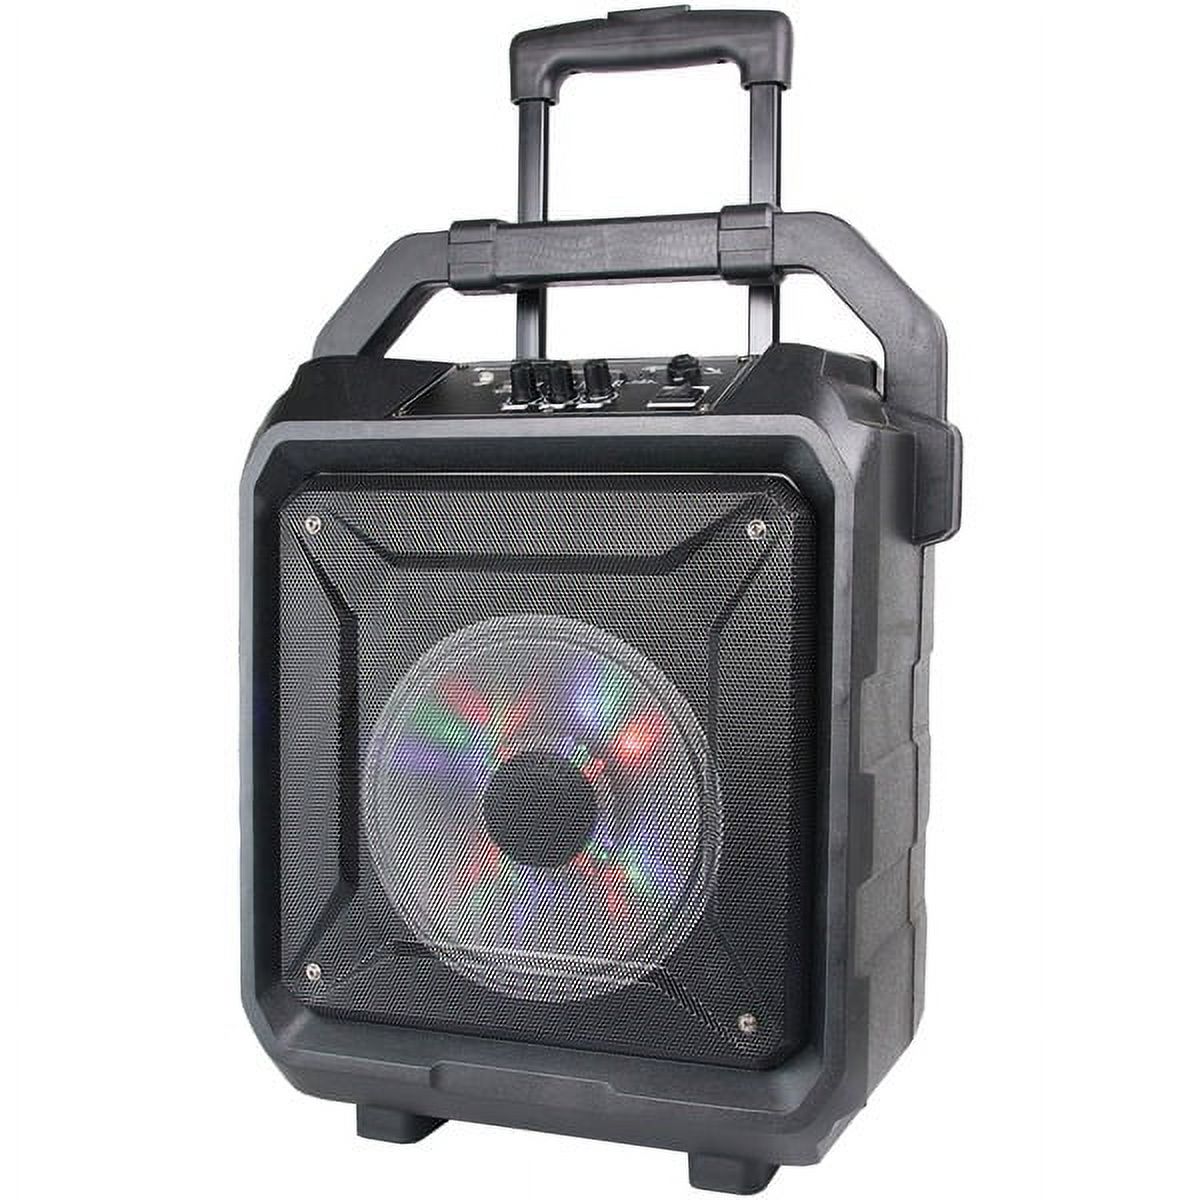 IQ Sound Speaker System - 25W RMS - Black - image 1 of 6